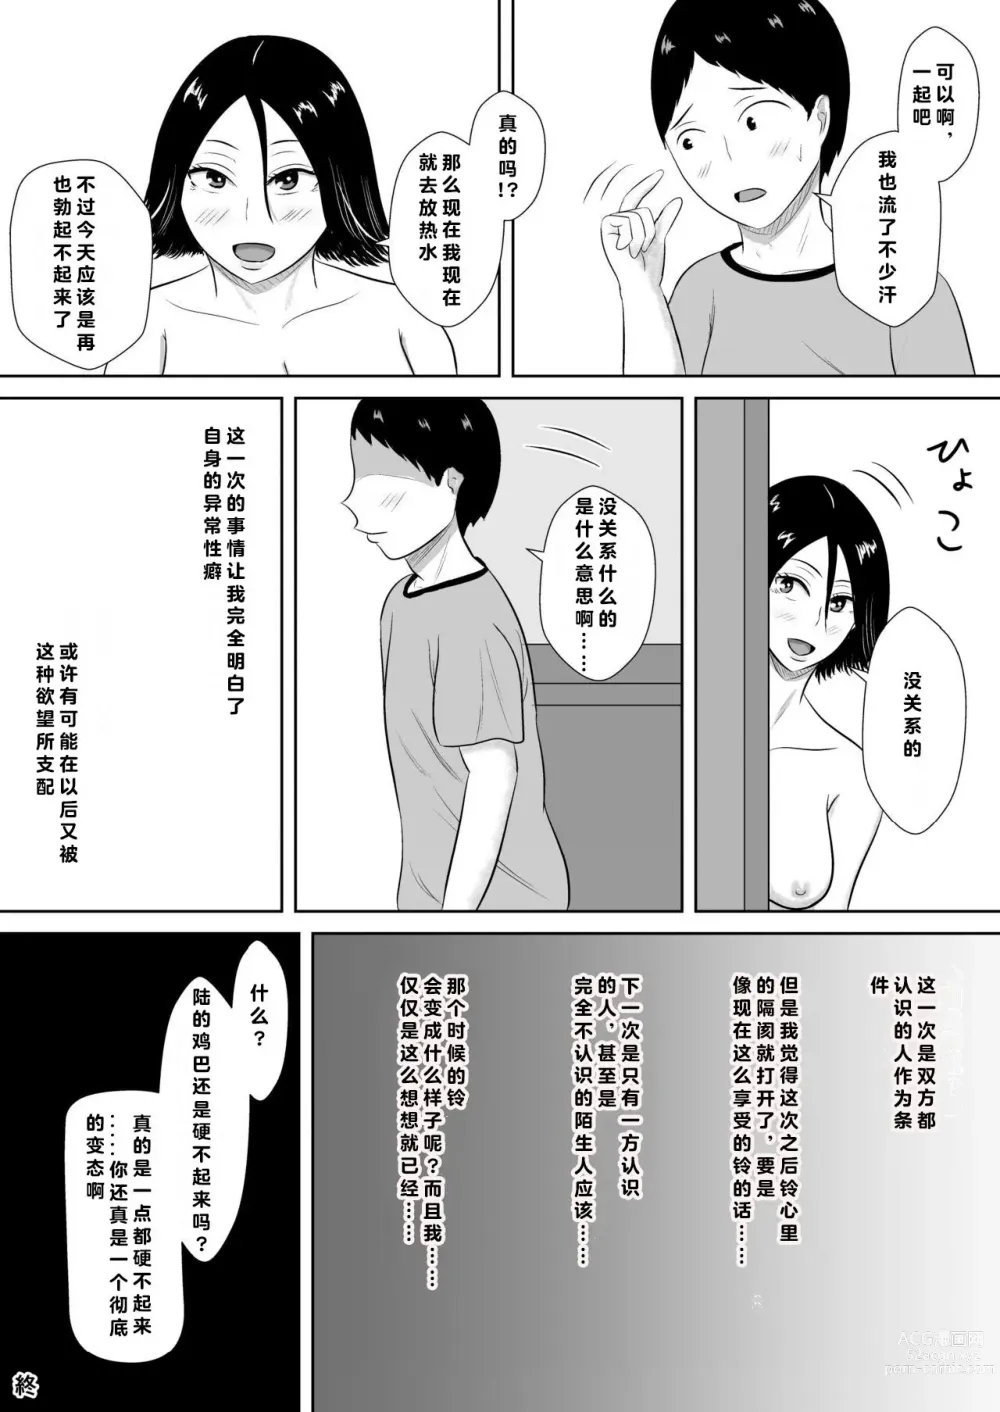 Page 122 of doujinshi 绿帽的沉沦